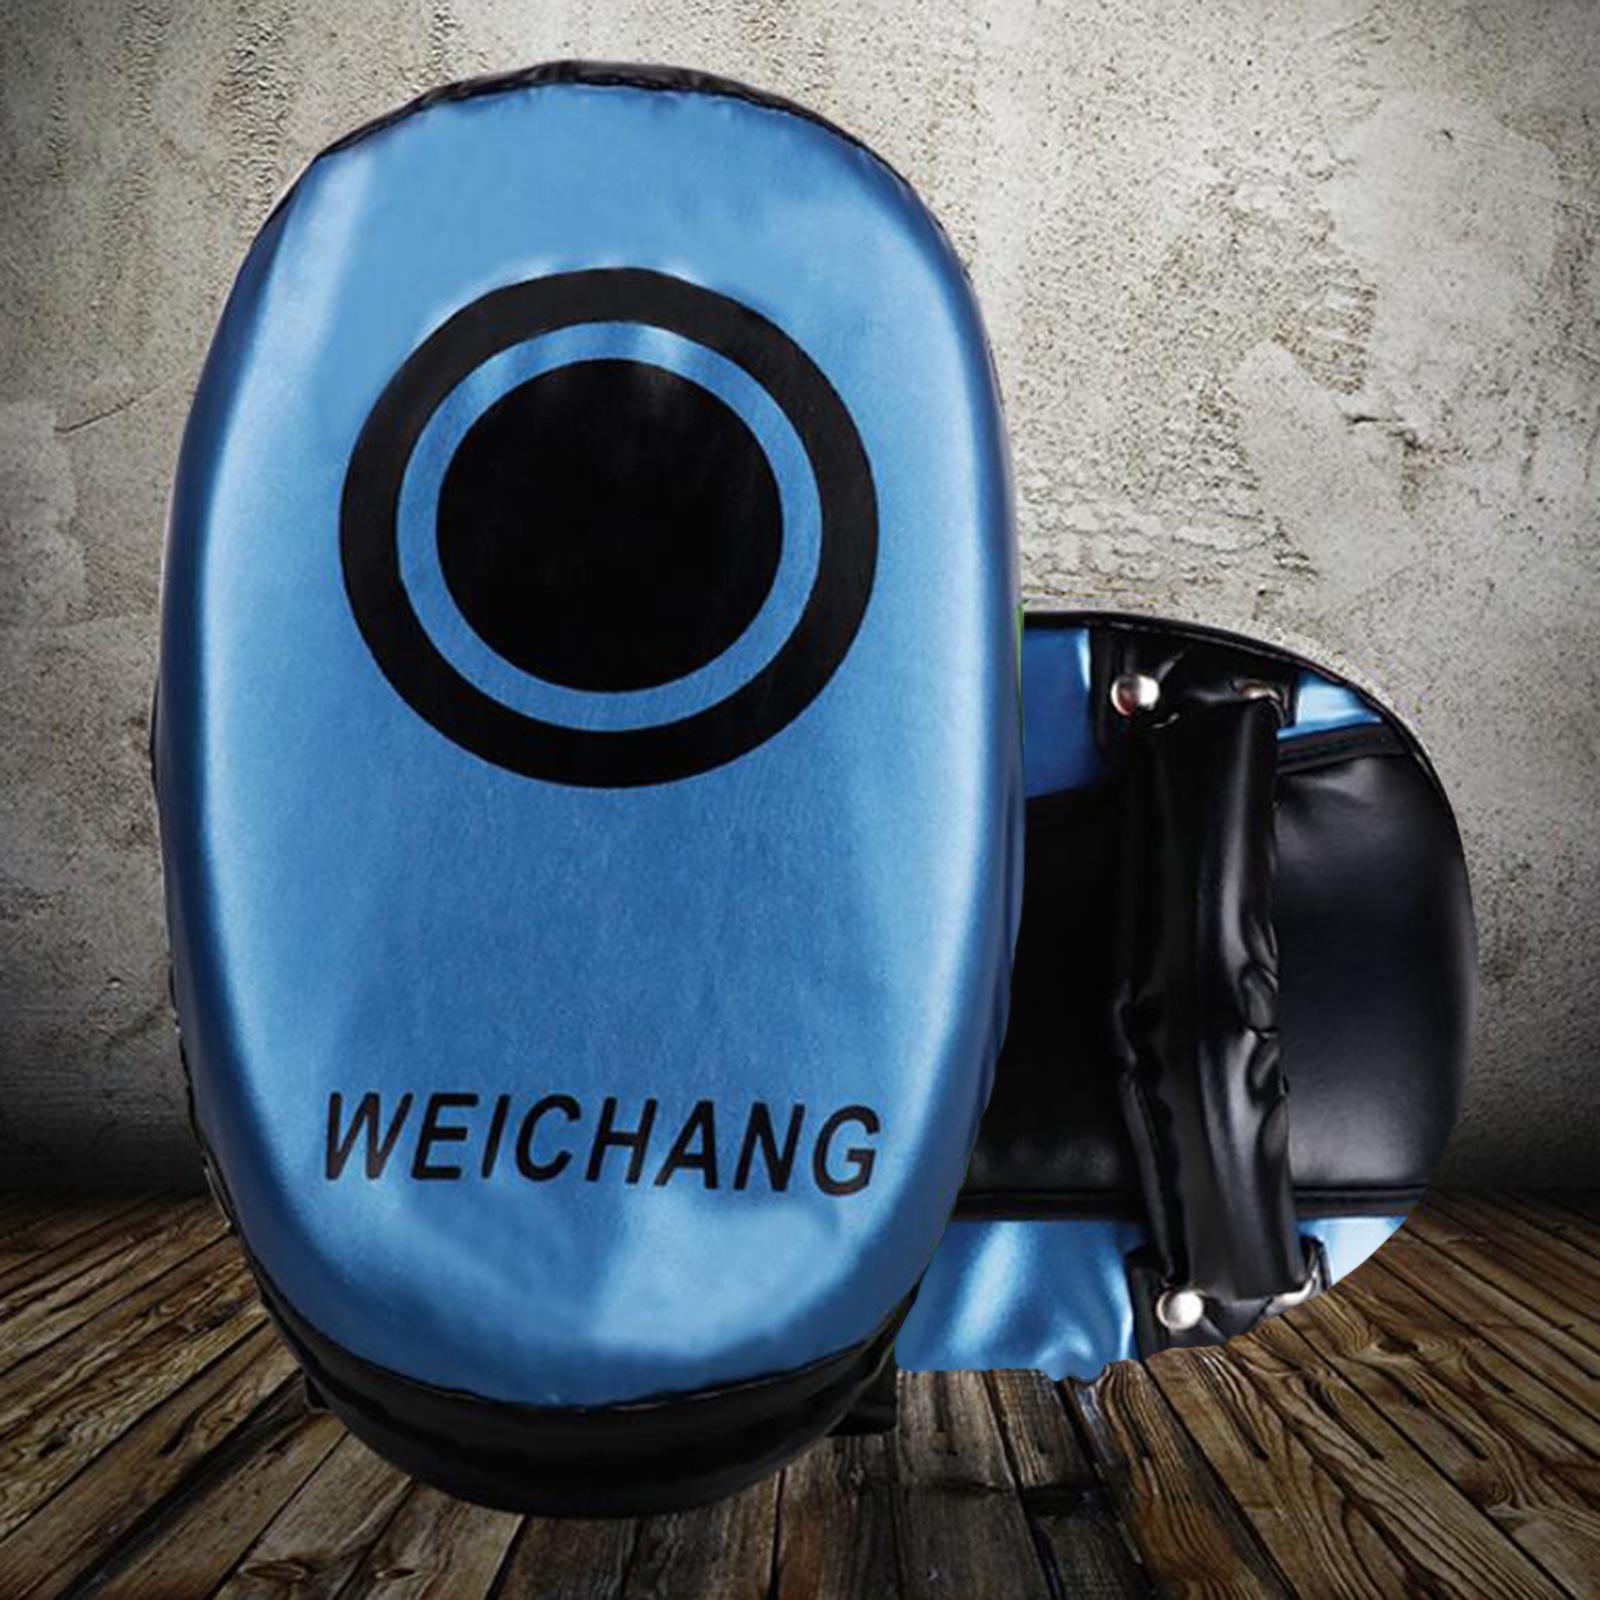 Kicking Striking Body Pad Kickboxing Mma Punch Bag Boxing Curved Focus Mitts black blue 20x34cm